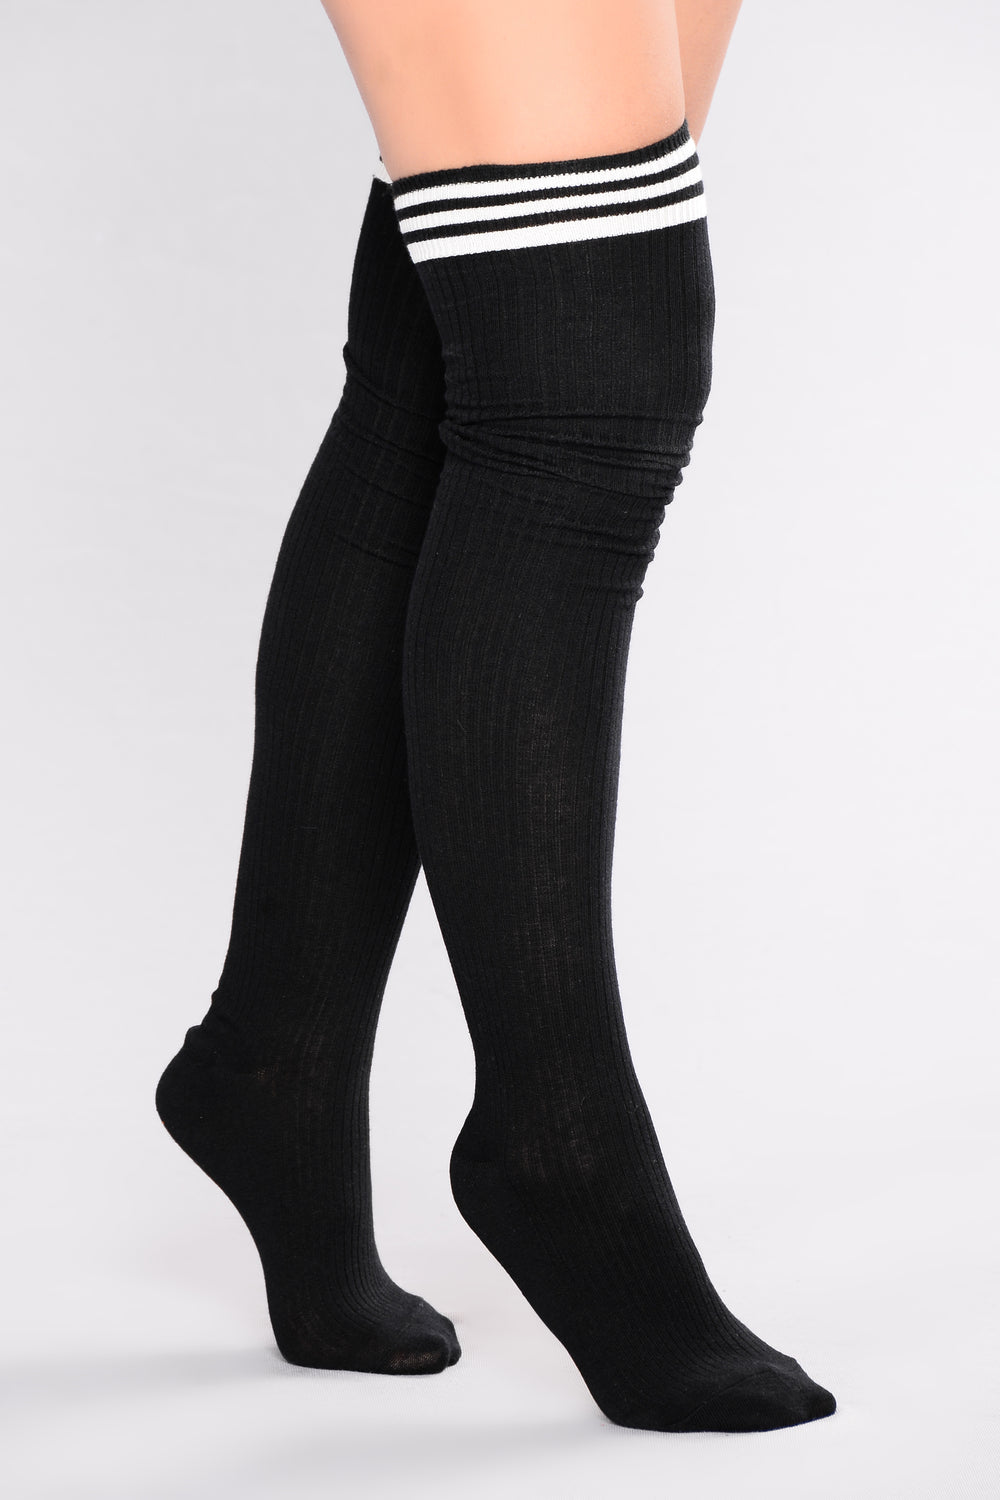 Adra Over The Knee Socks - Black